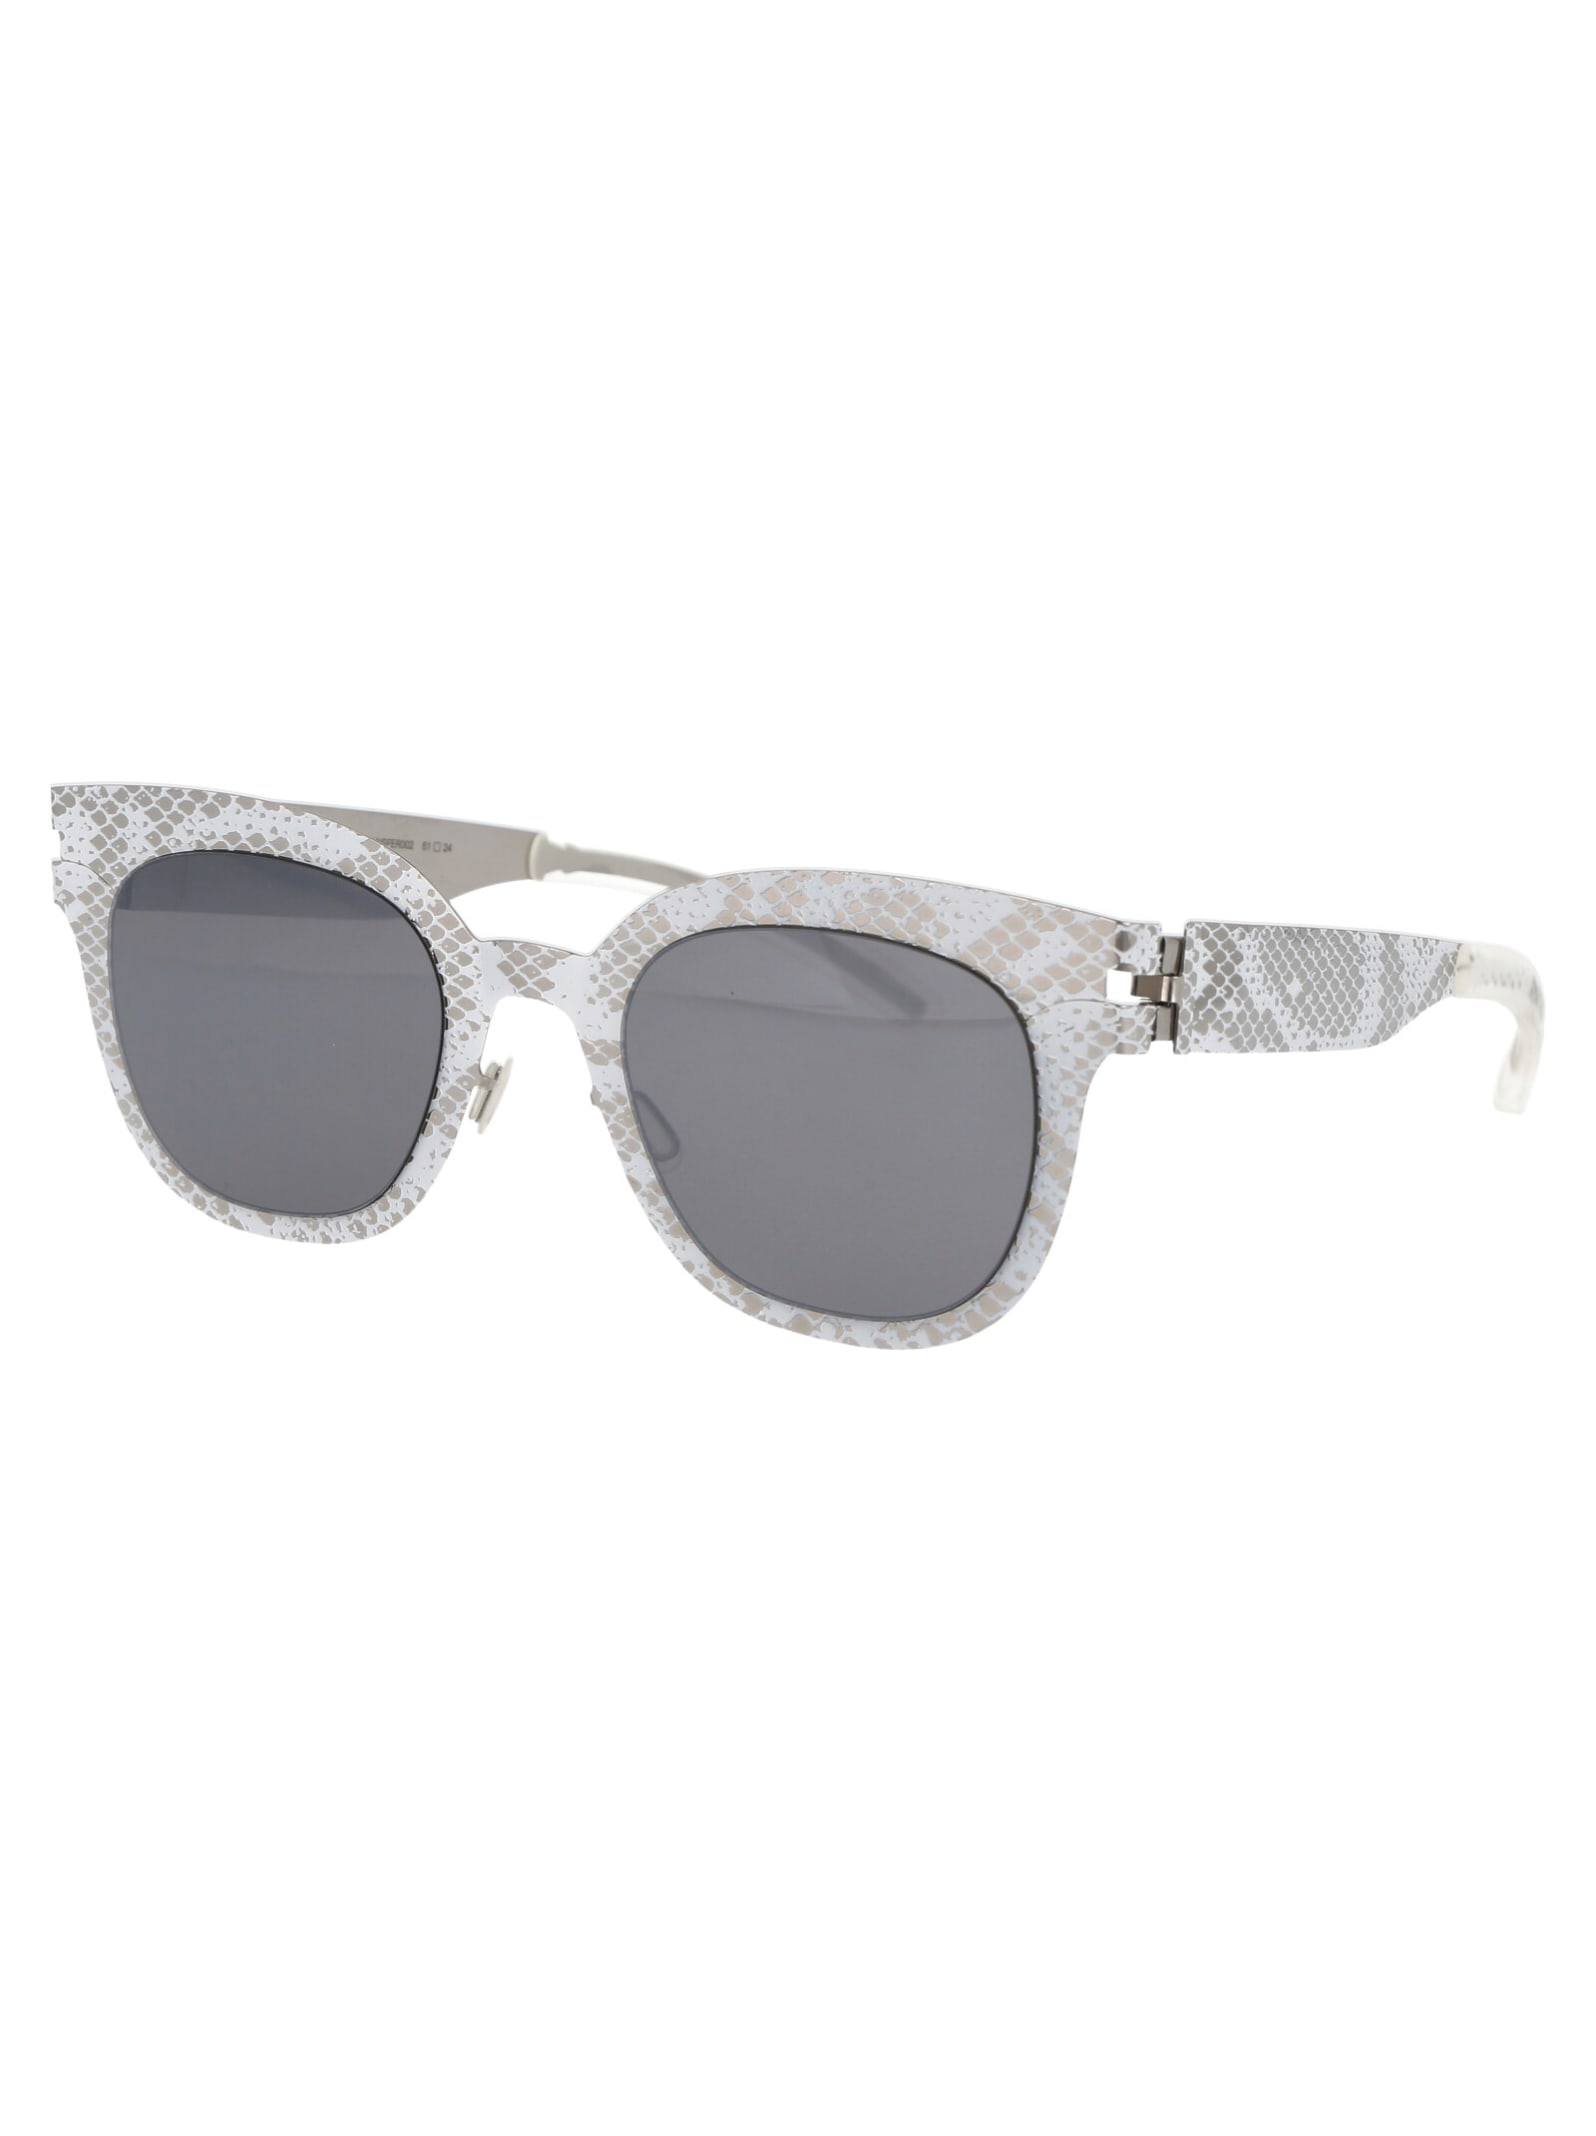 Shop Mykita Mmtransfer002 Sunglasses In 241 Silver White Python Brown Flash